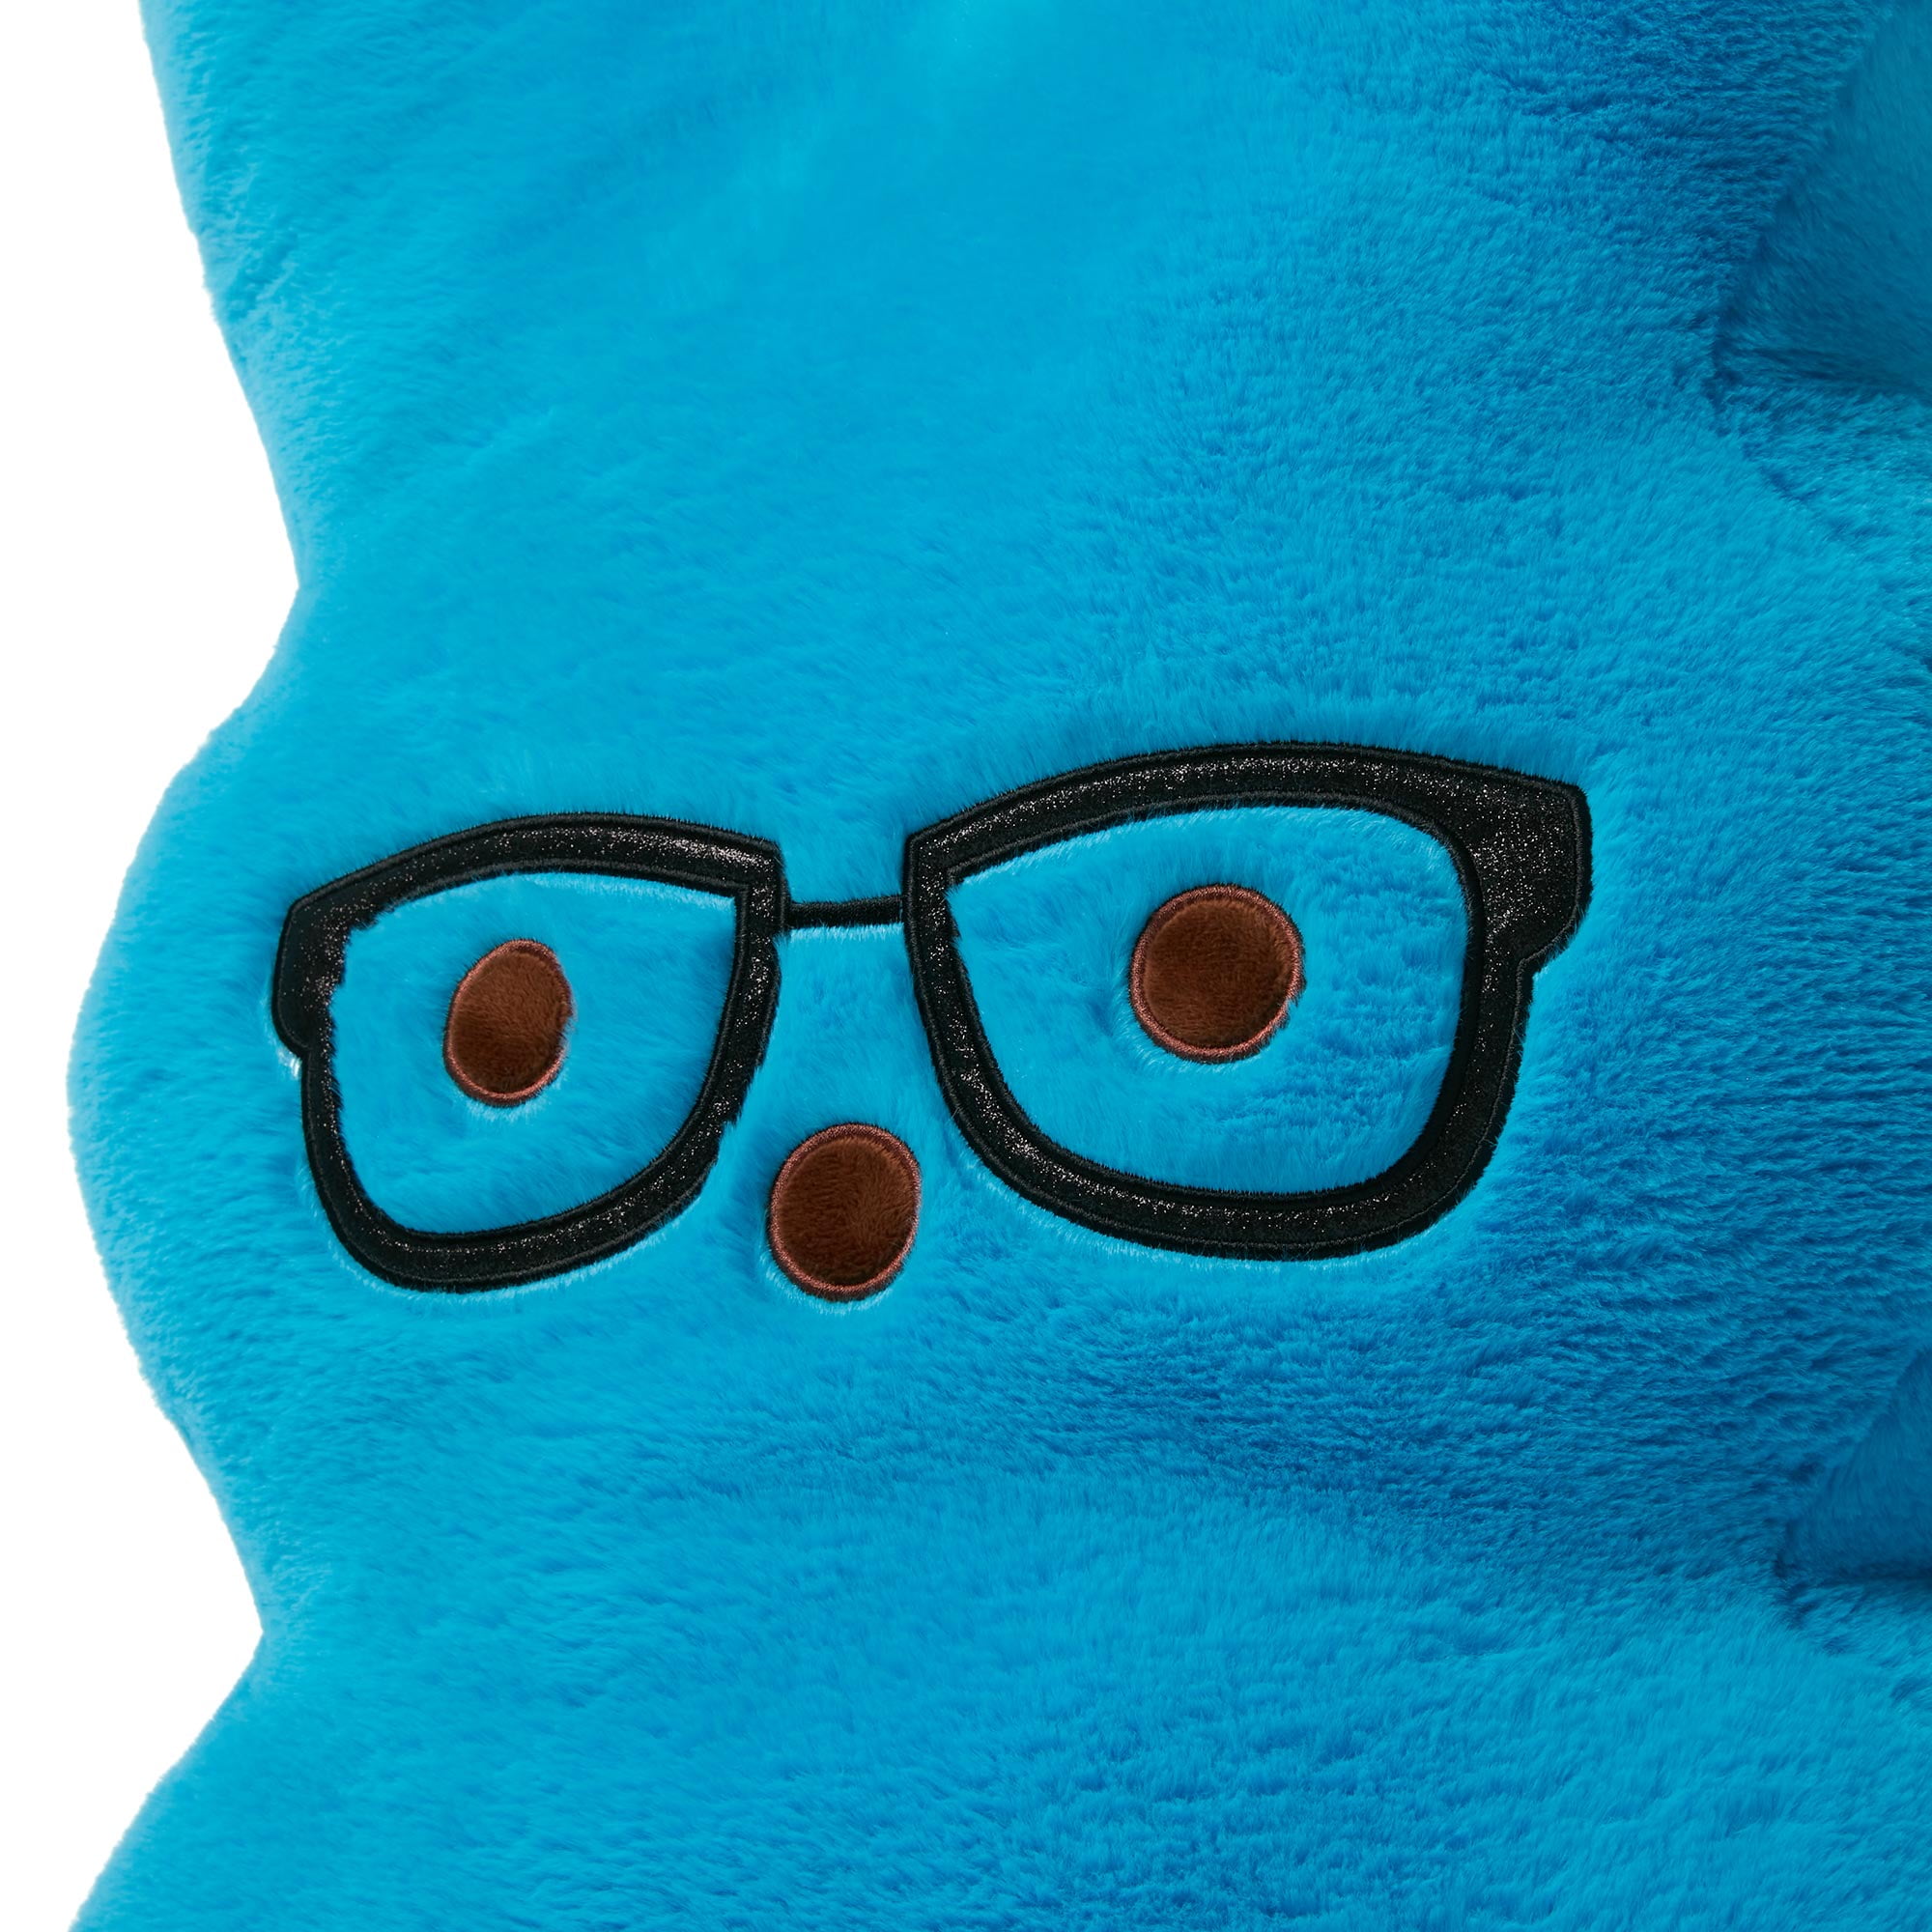 Peeps Bunny Plush | Color: Blue | Size: Osbb | Pm-64552136's Closet